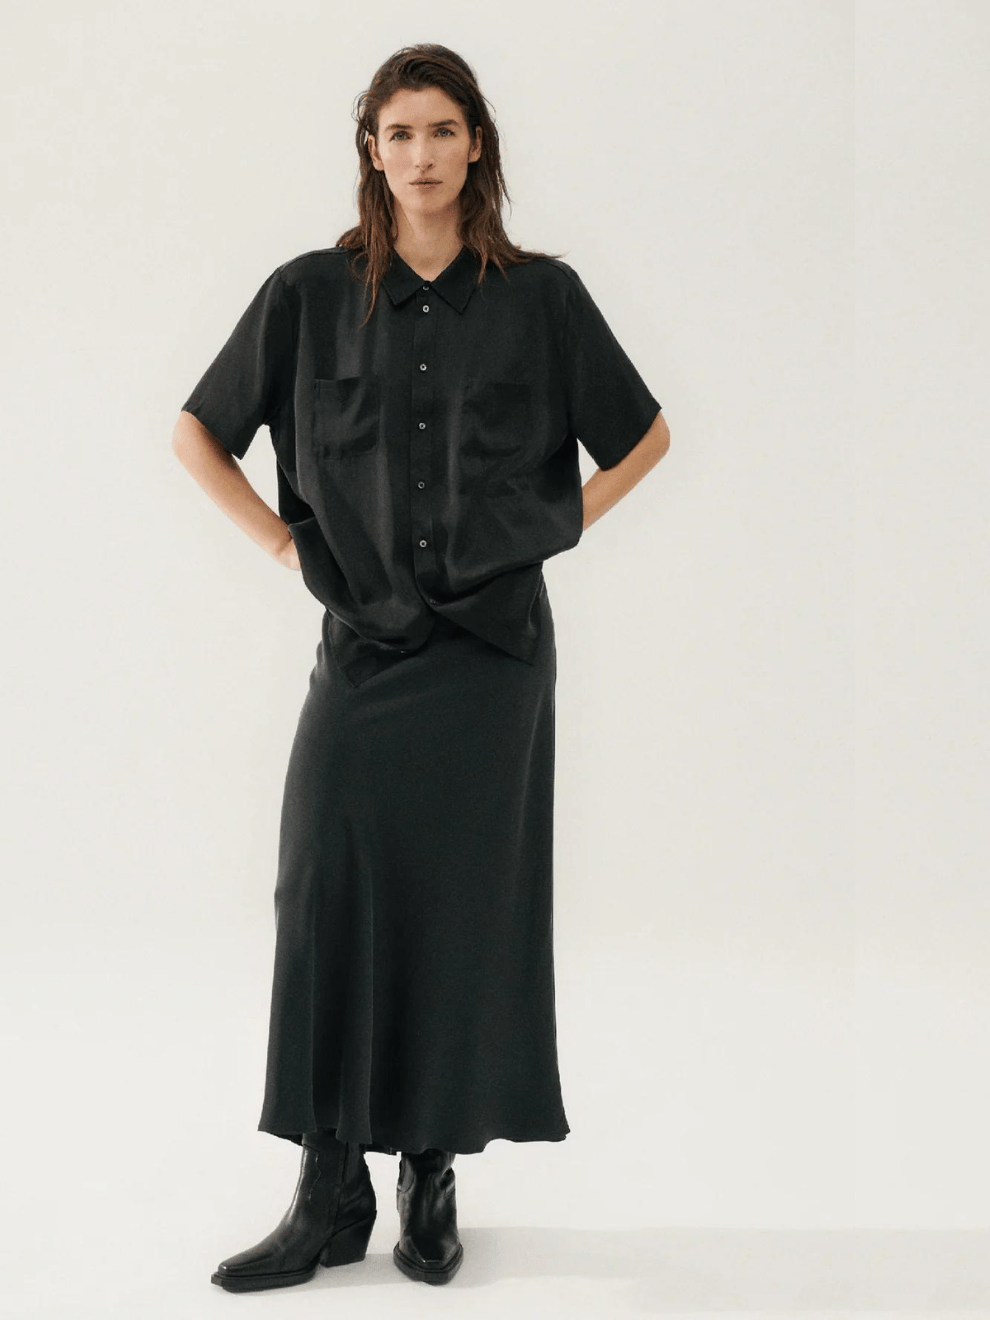 Long Bias Cut Skirt in Black